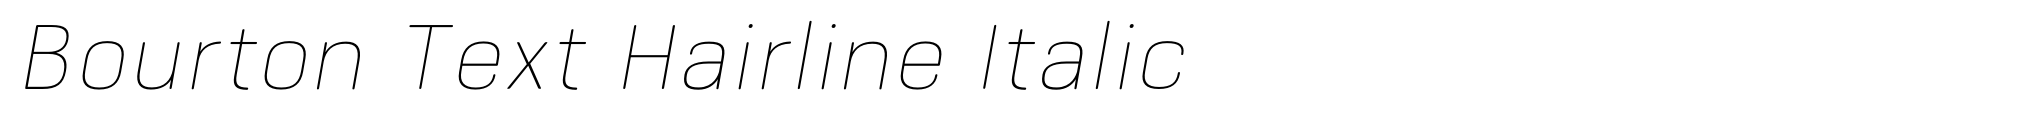 Bourton Text Hairline Italic image